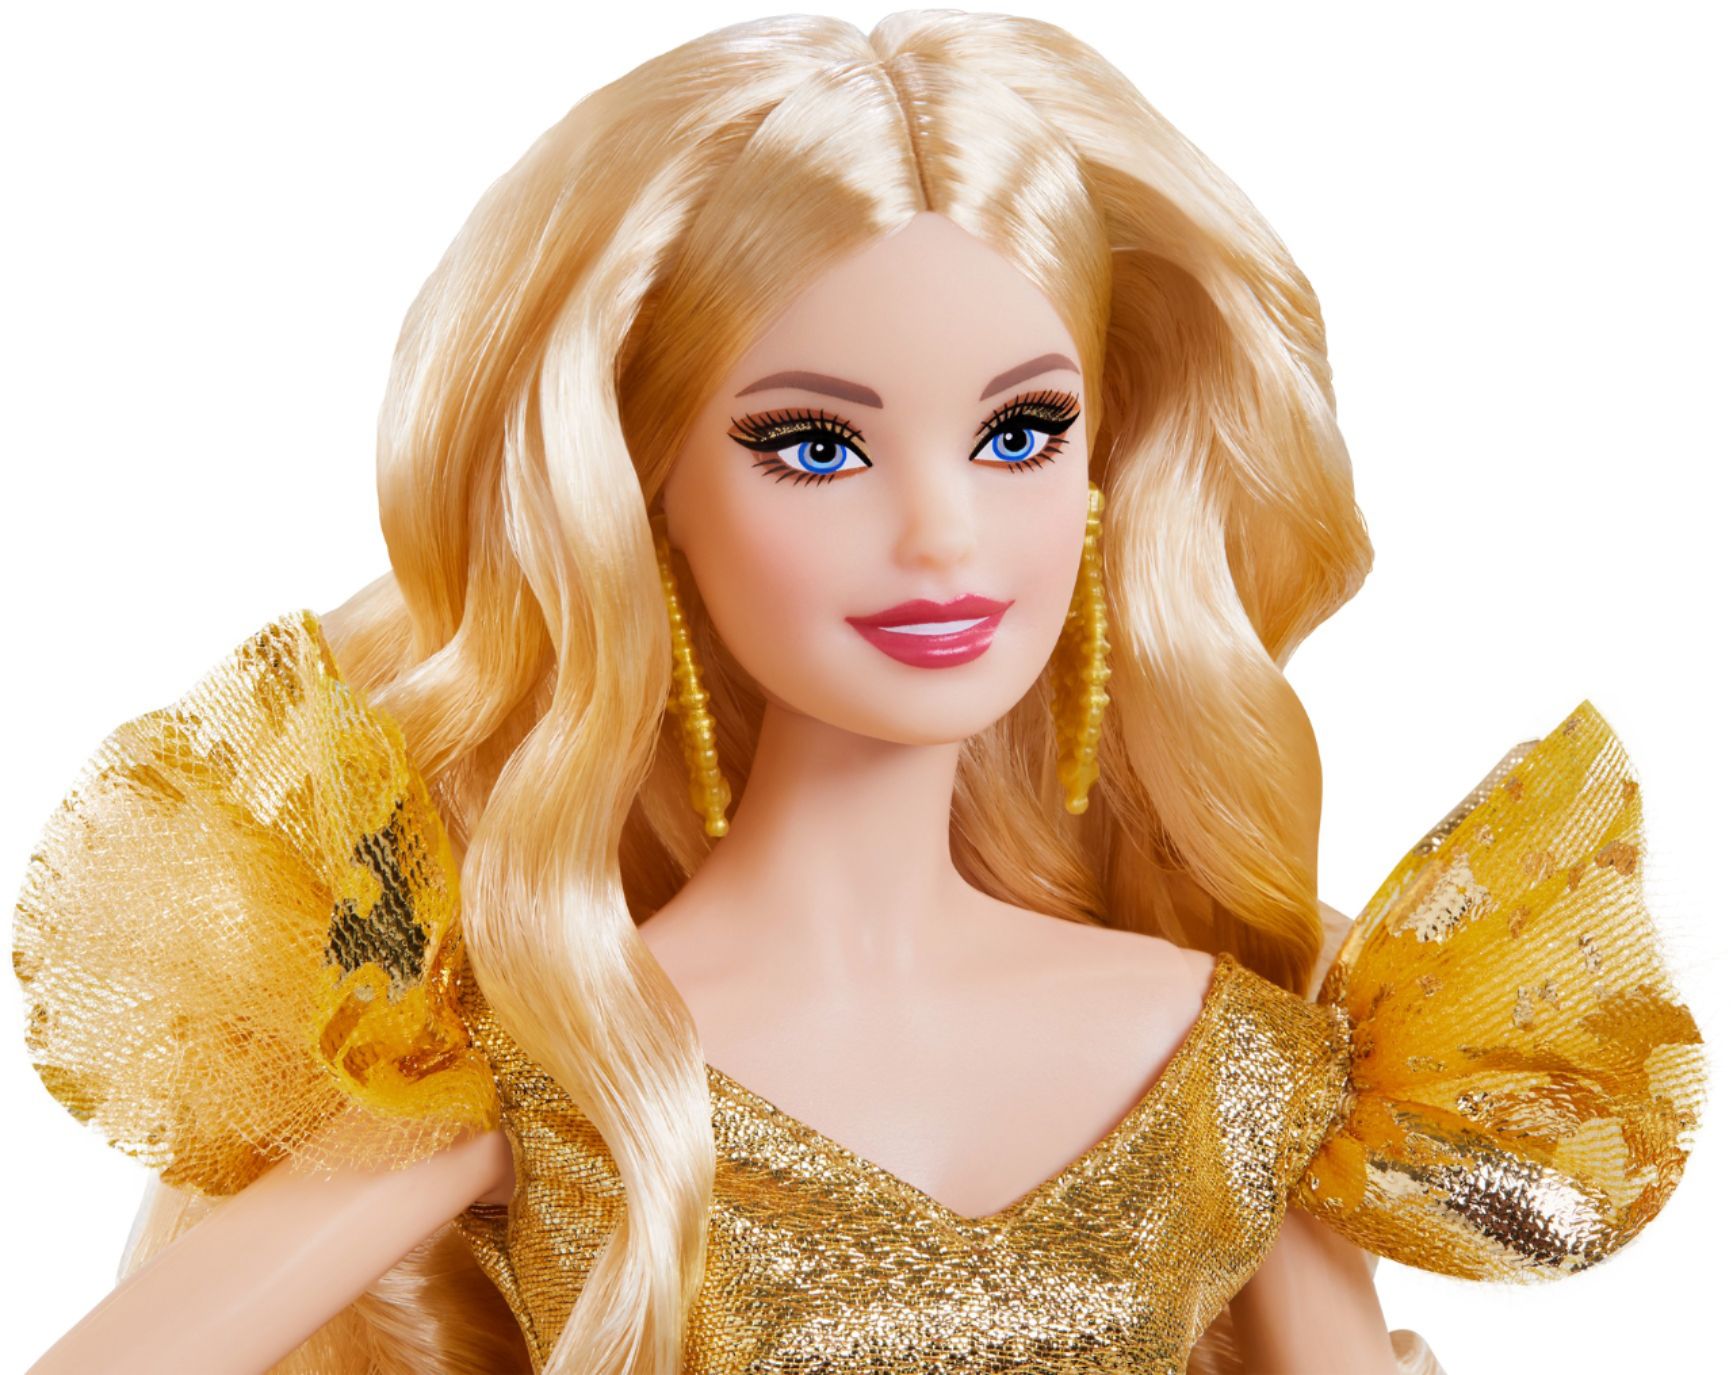 Mattel GHT54 Holiday Barbie Blonde Gold for sale online 